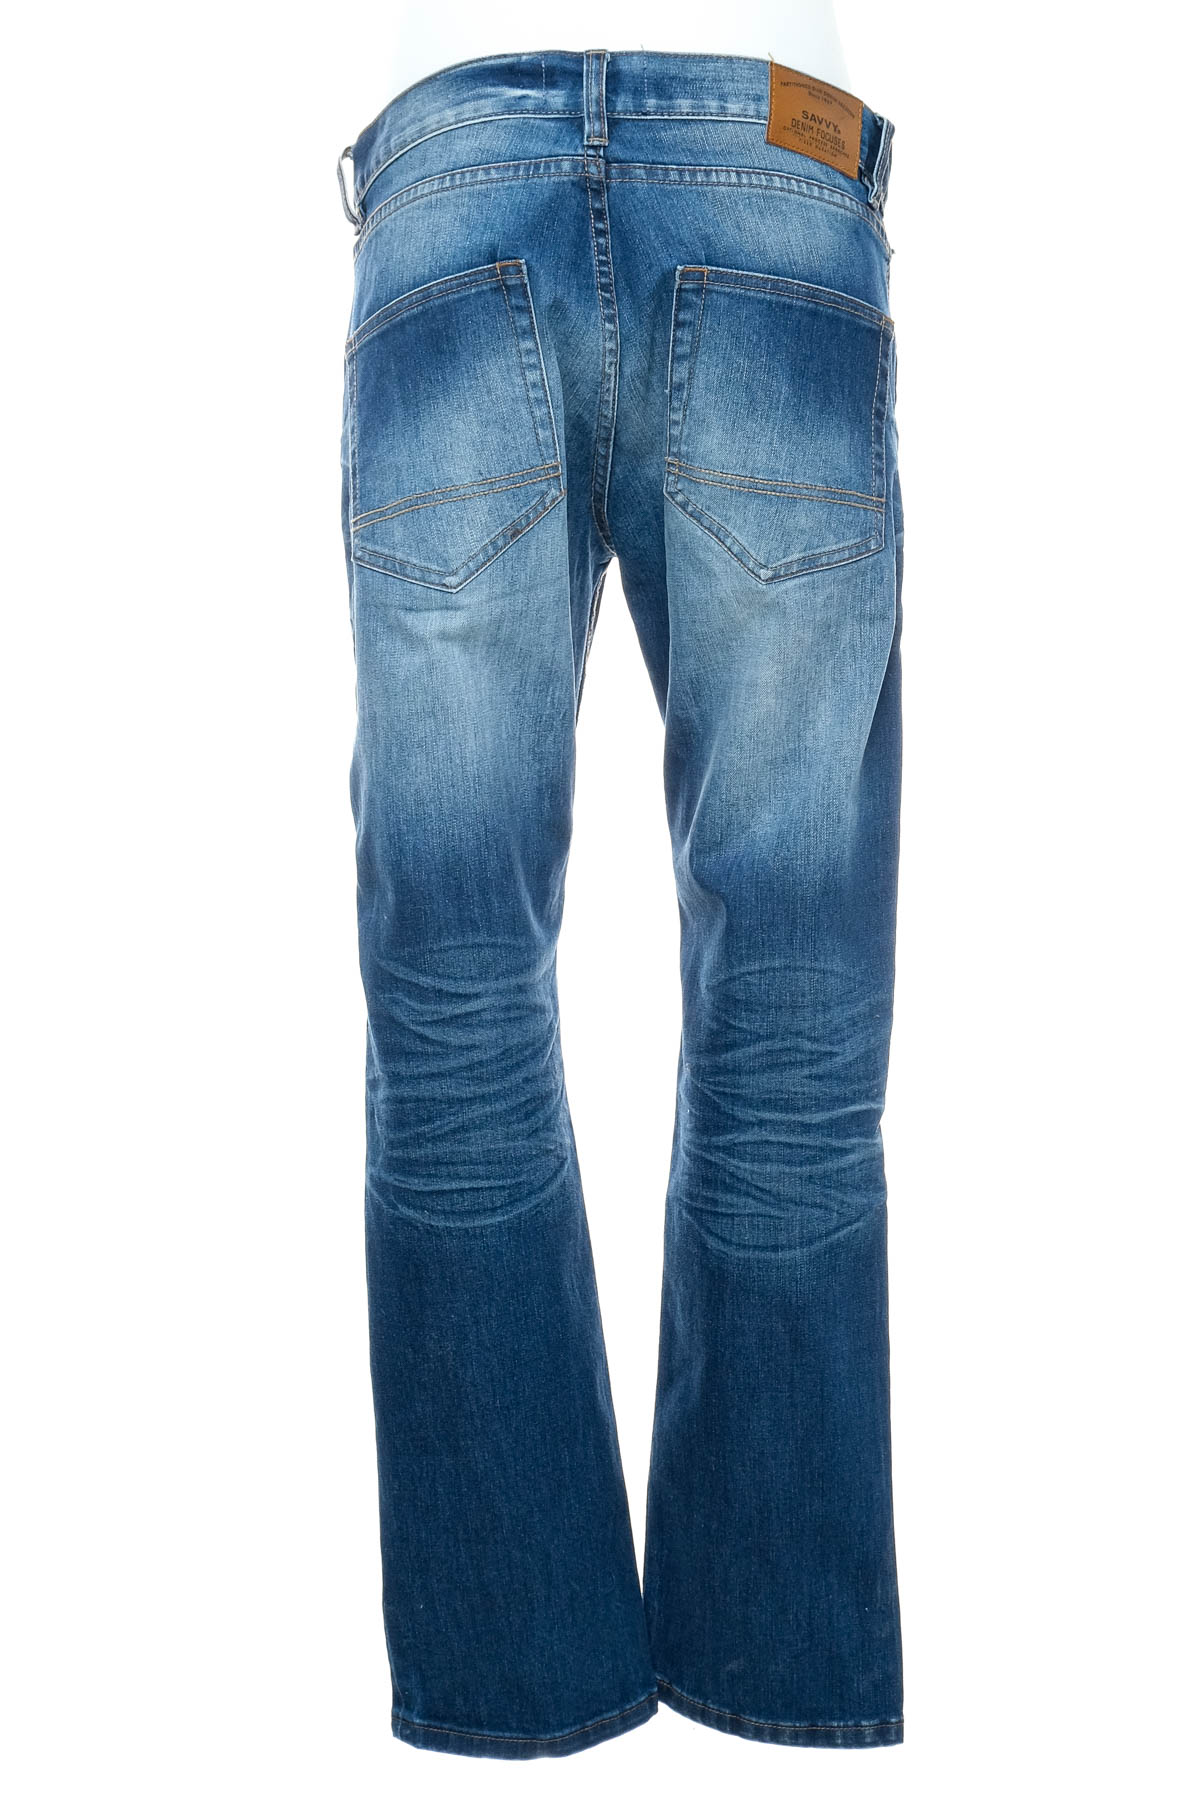 Men's jeans - SAVVY Denim - 1